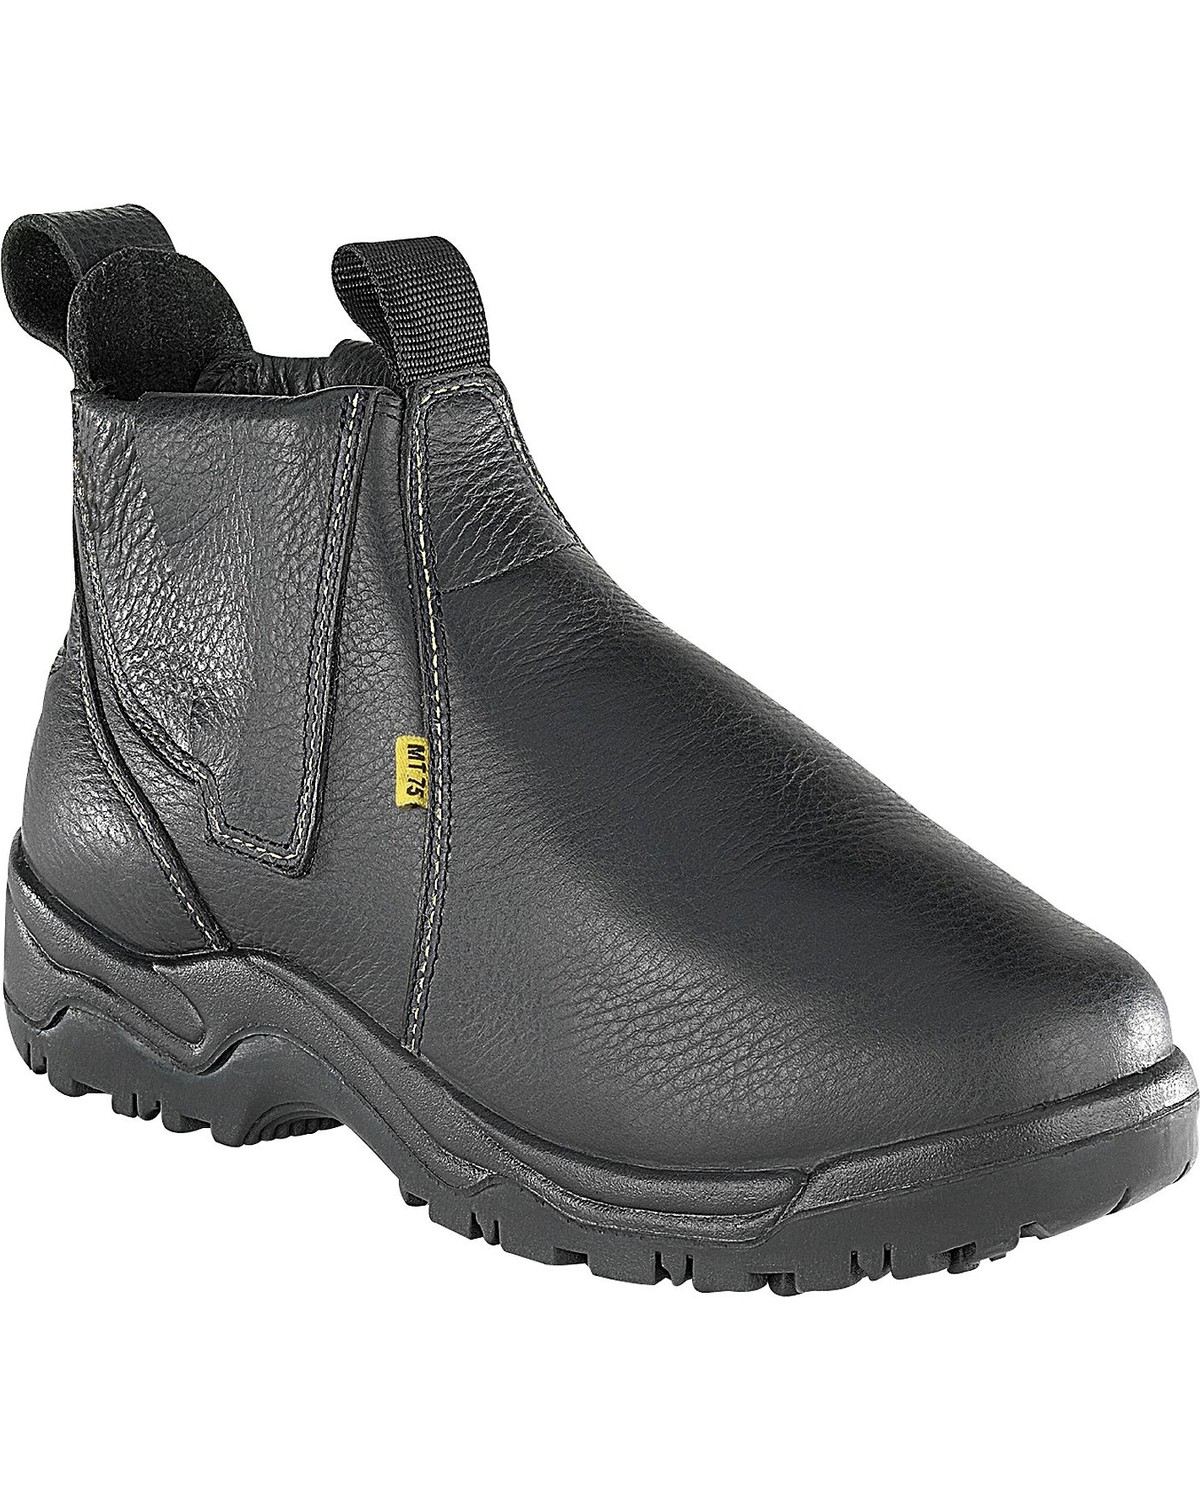 florsheim steel toe work boots